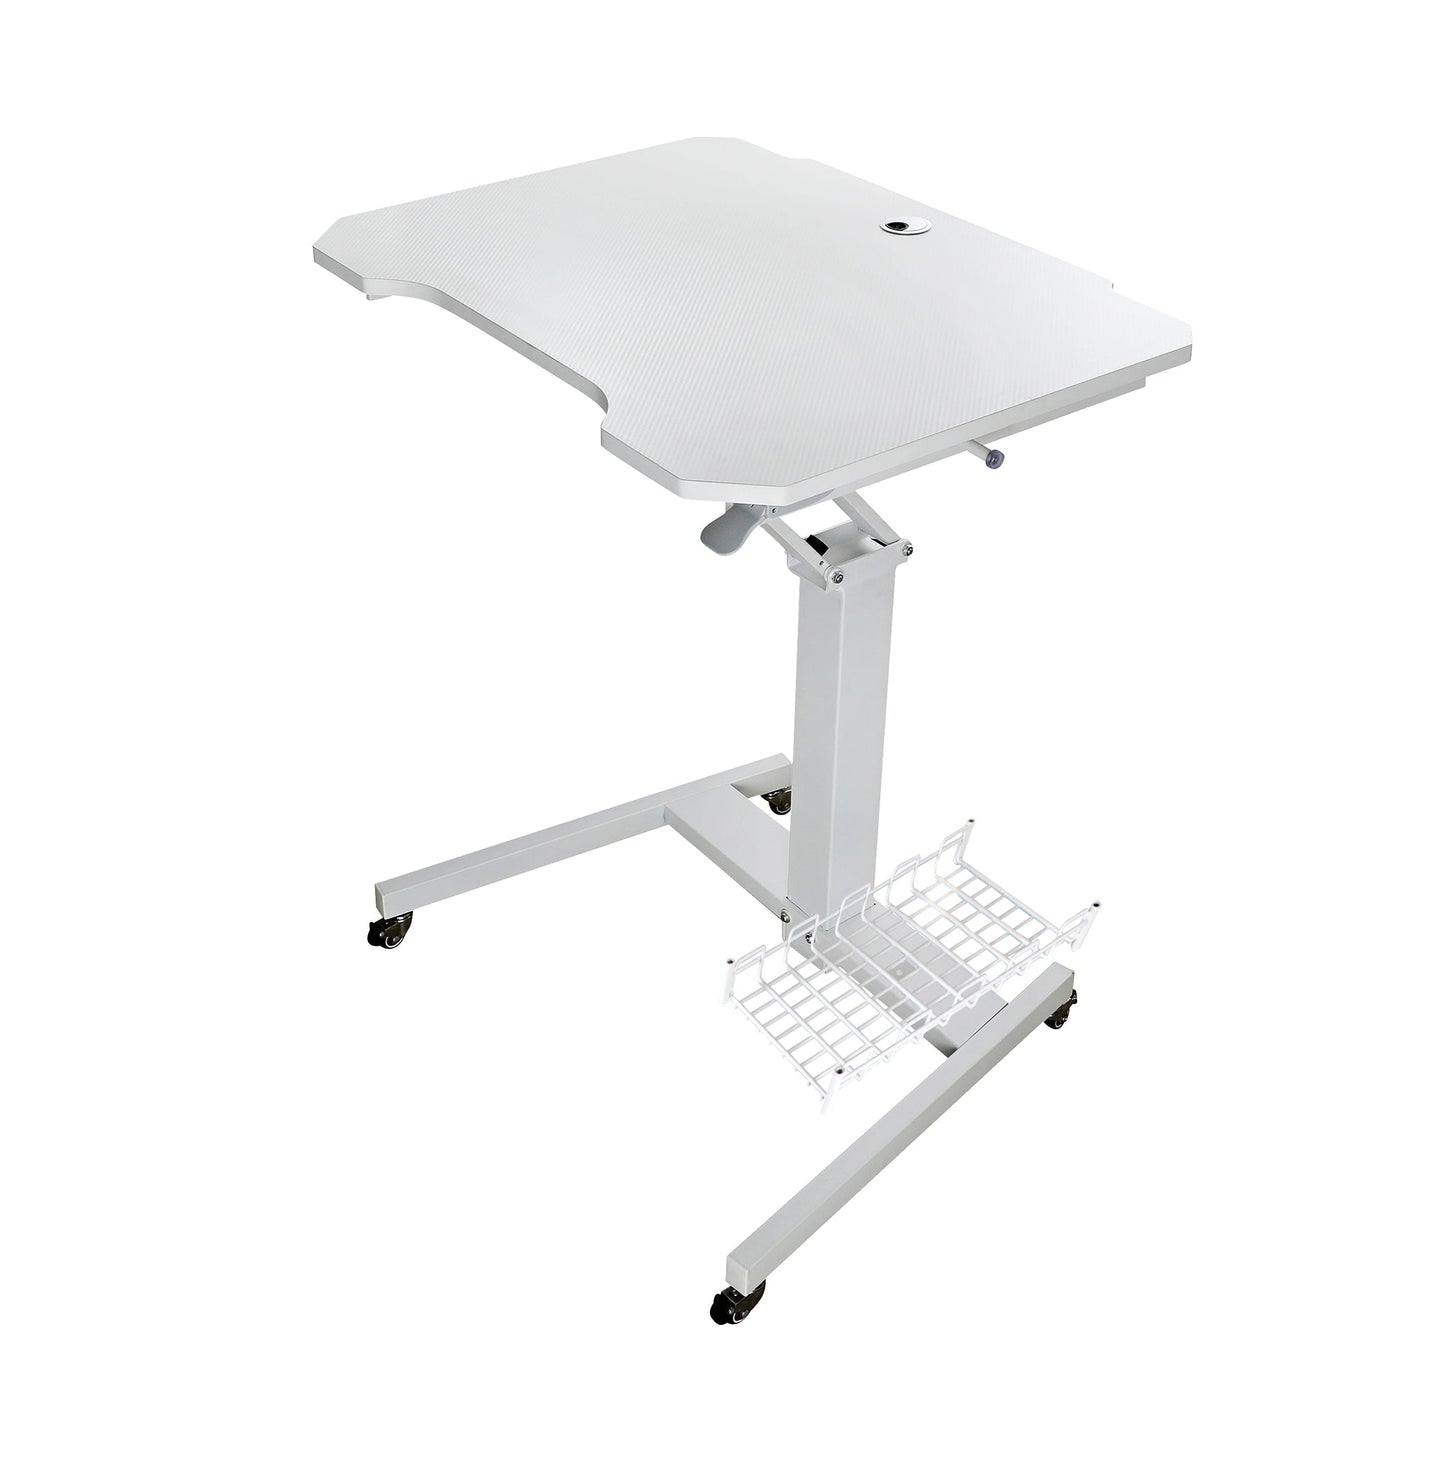 Mobile Standing Game Desk Height Adjustable Pneumatic Adjustable, Workstation, Study Desk White+Computer Tower Stand